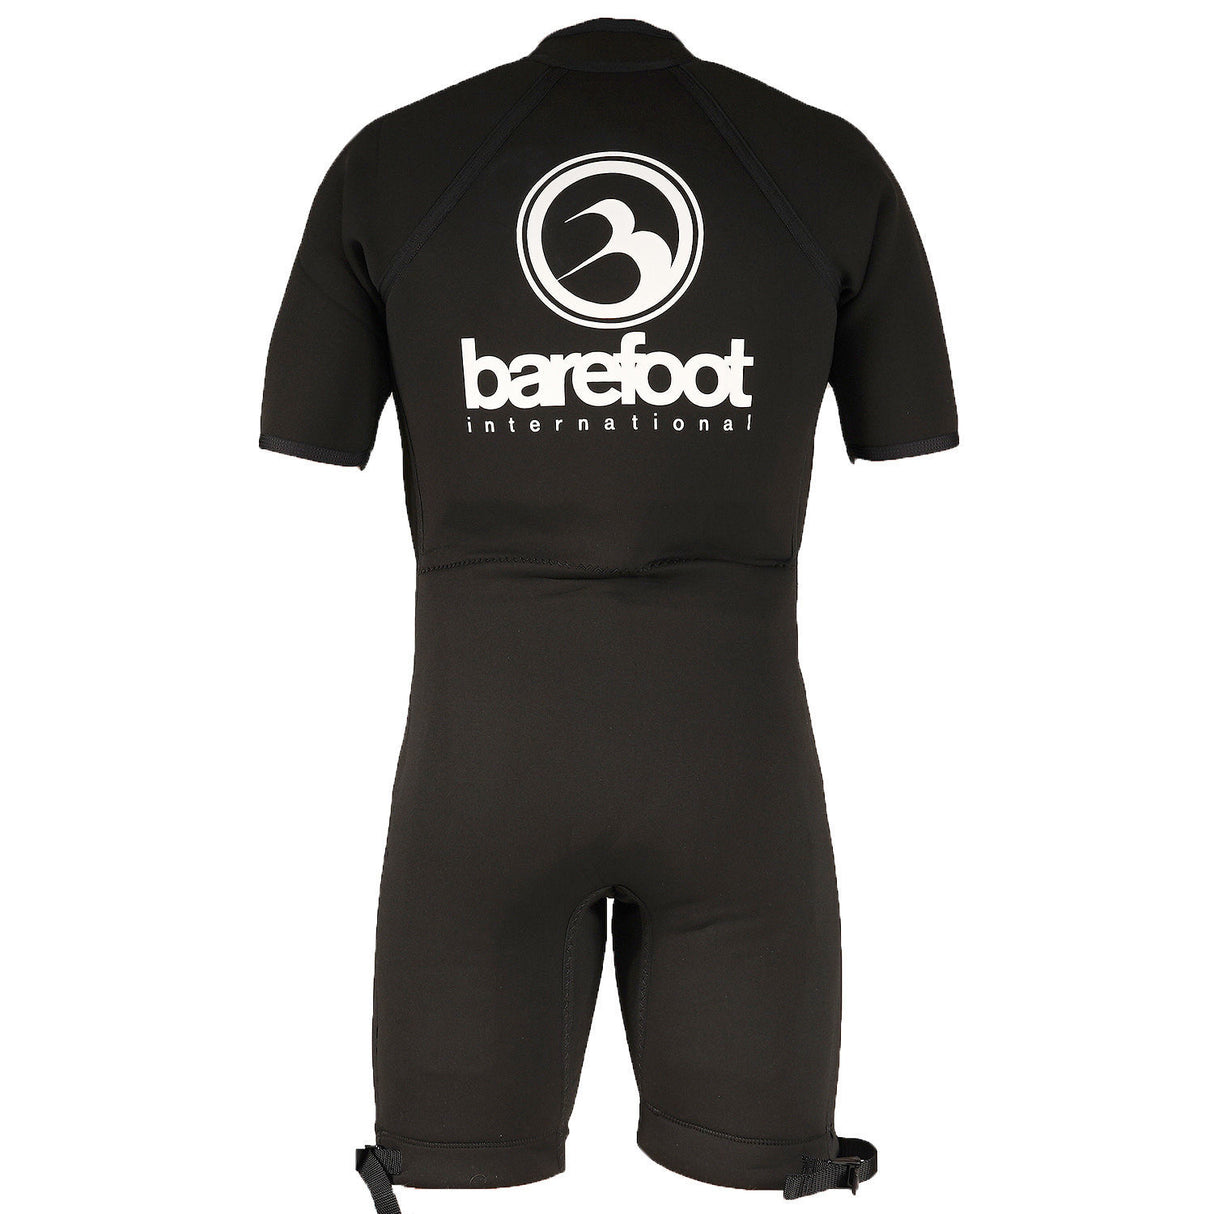 Barefoot International Iron Short Sleeve Barefoot Suit